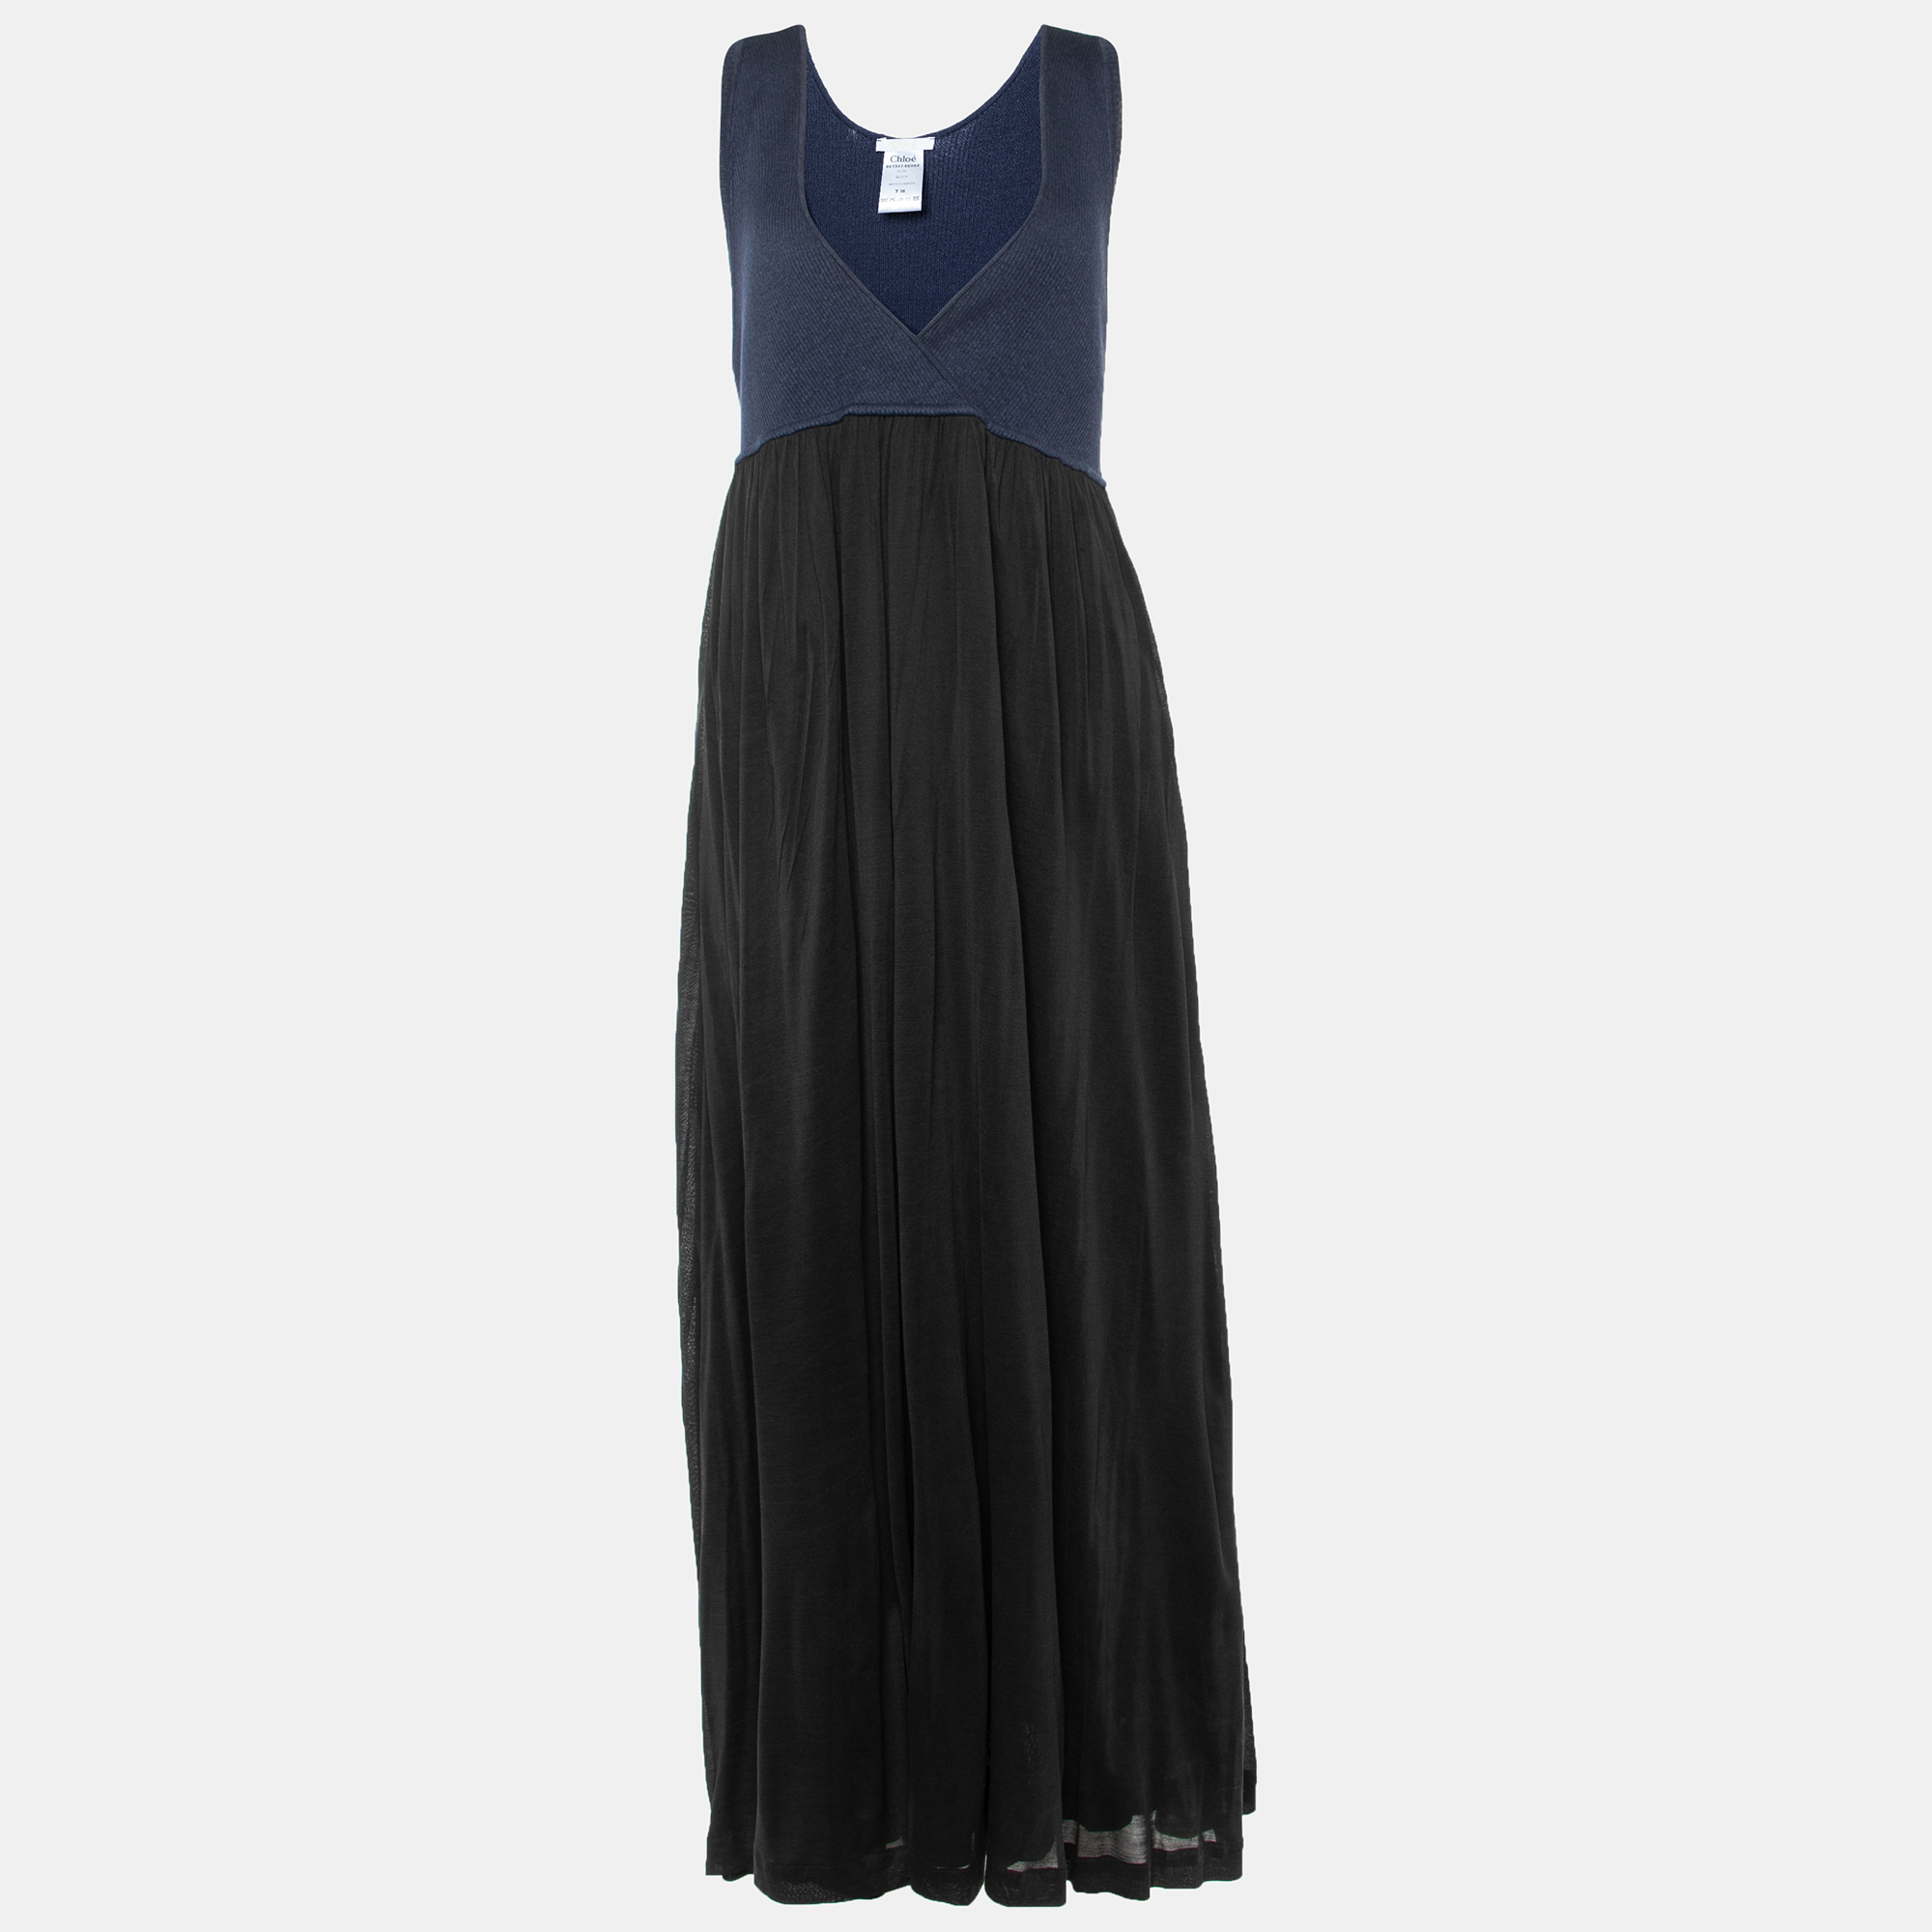 Chloe navy blue knit & black skirt detail maxi dress m